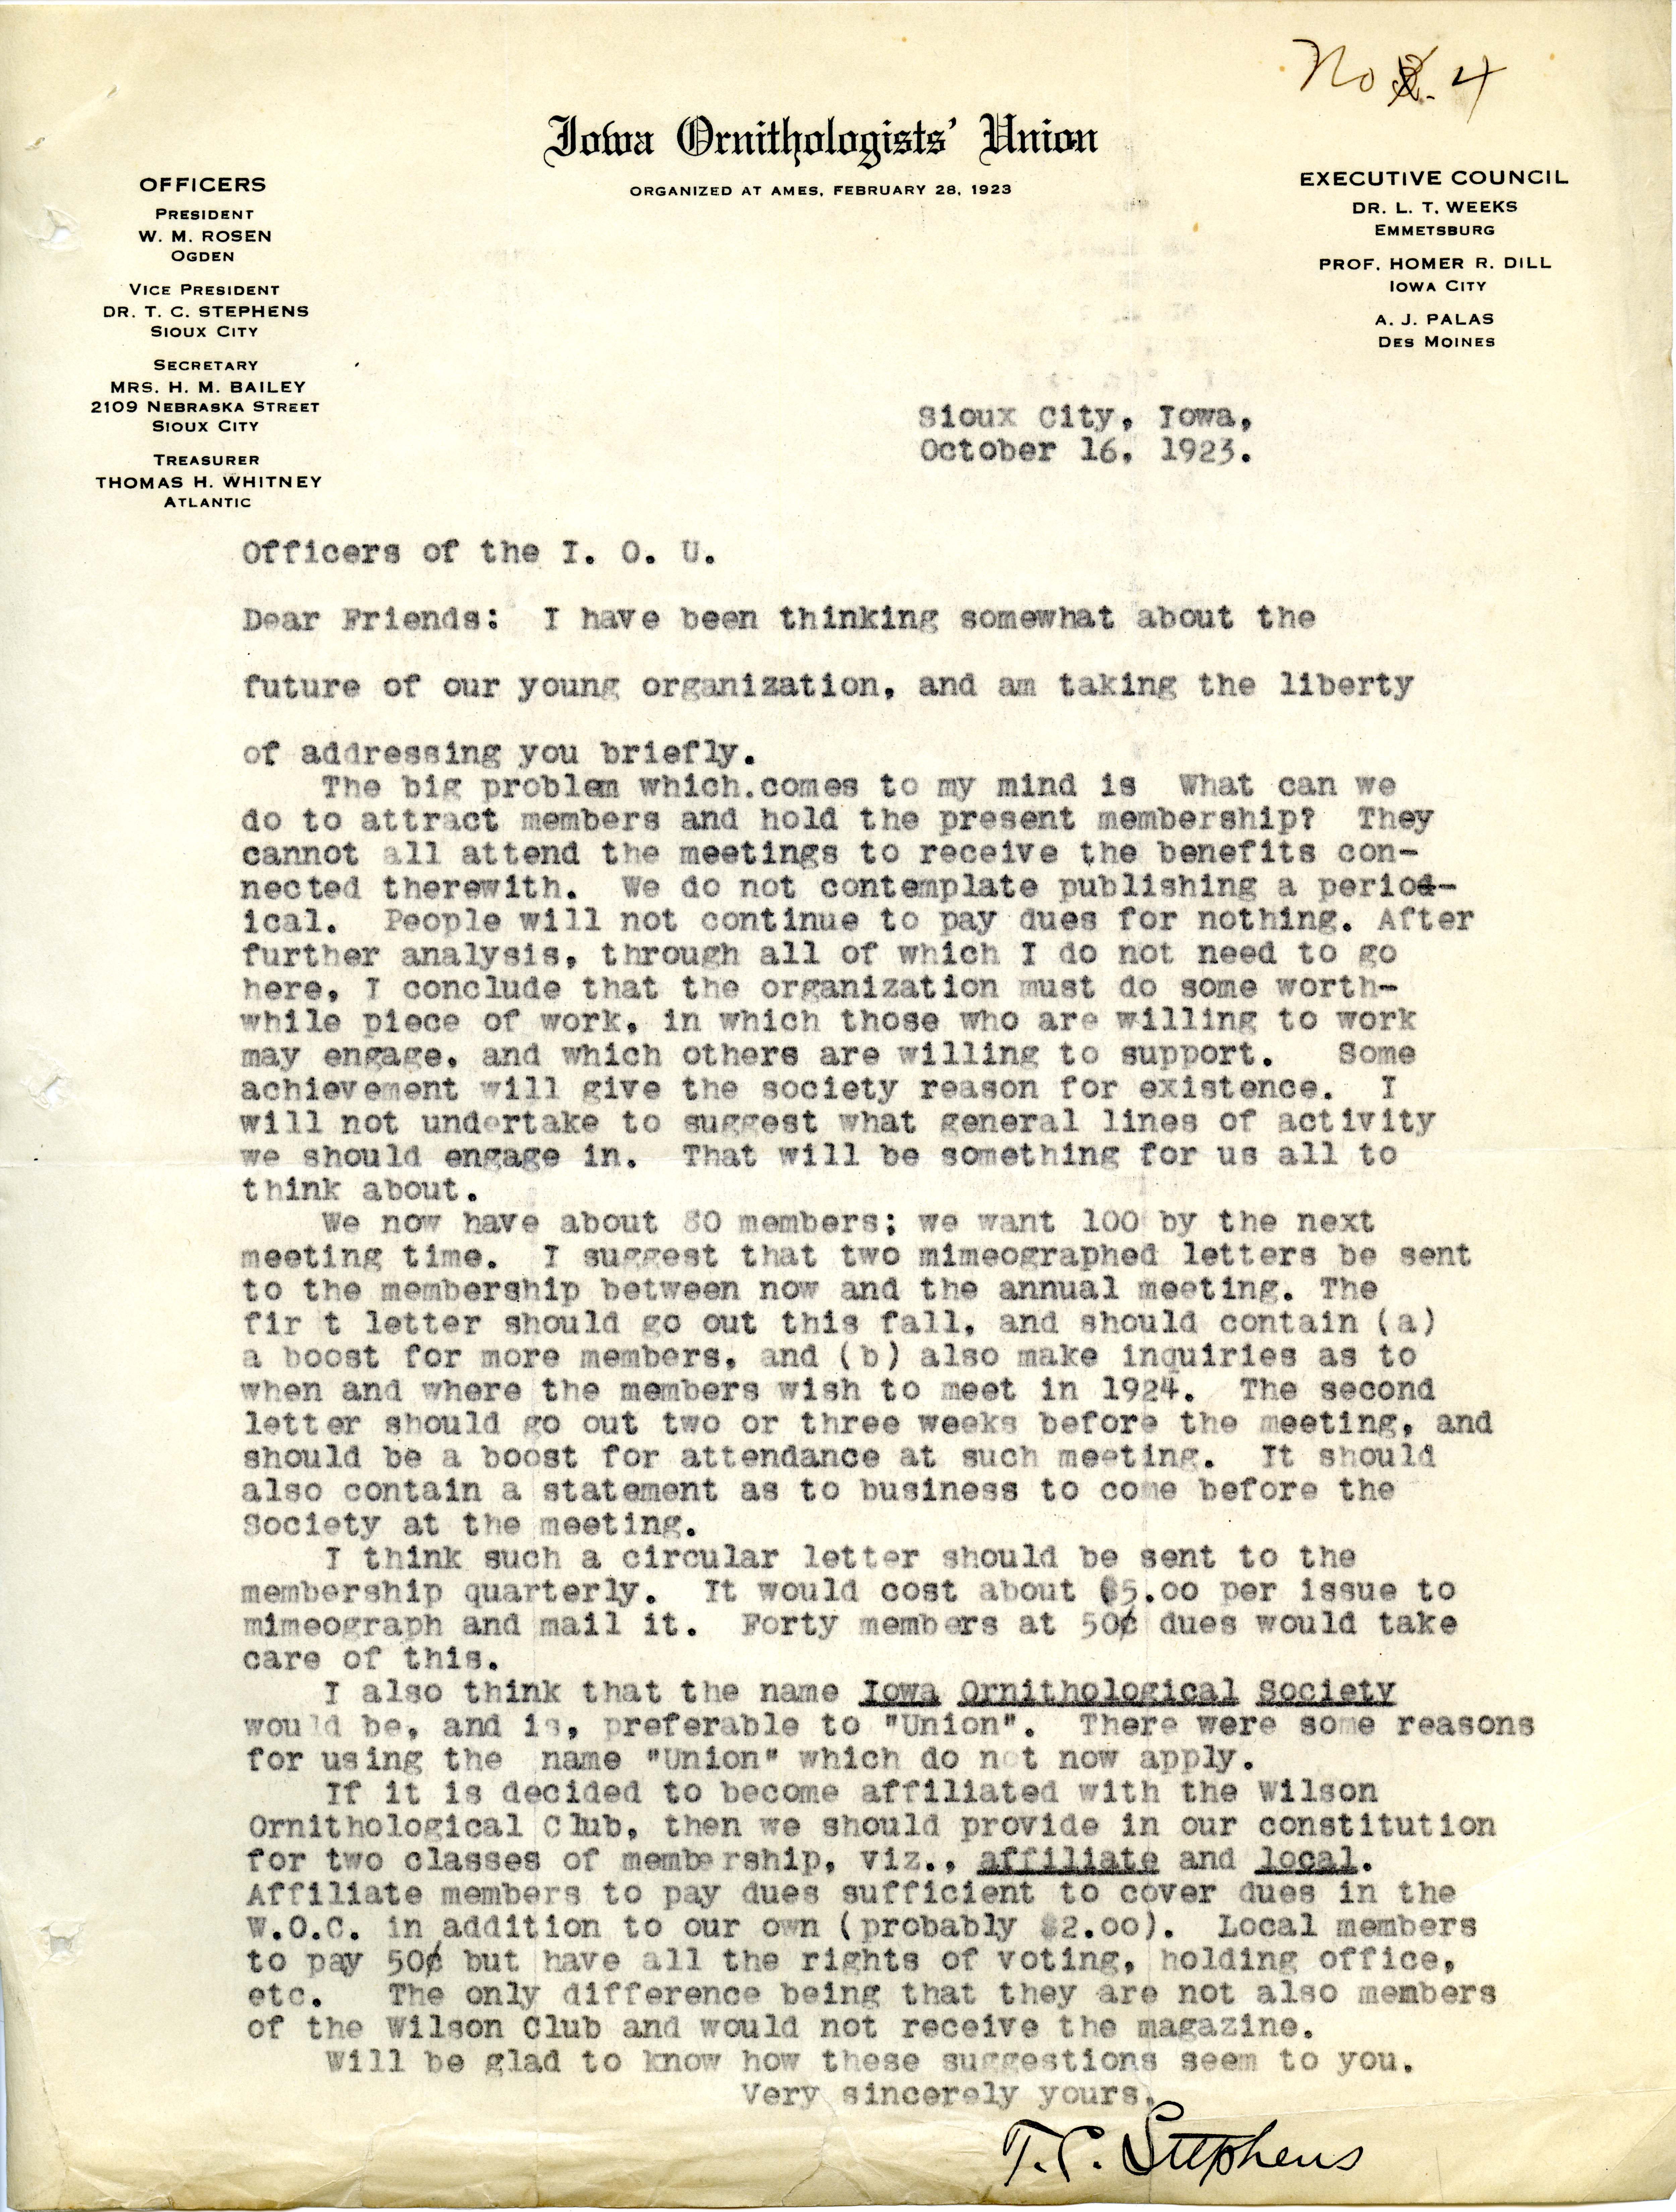 Thomas Calderwood Stephens letter to officers of the Iowa Ornithologists' Union regarding the future of the organization, October 16, 1923